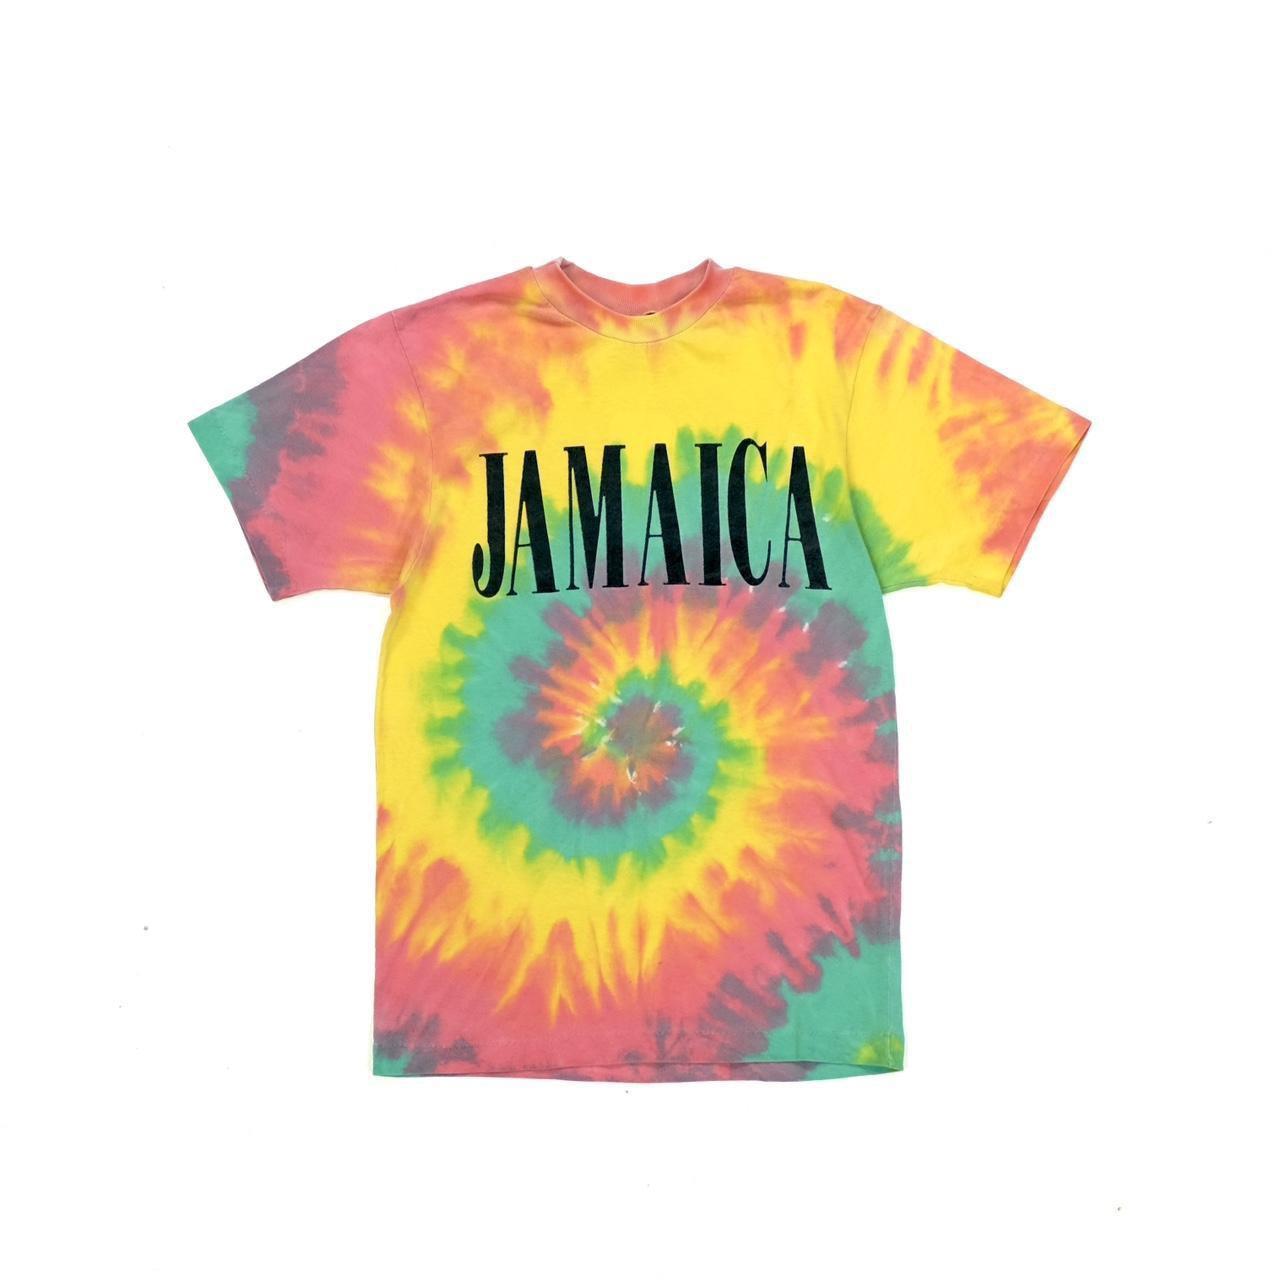 Jamaica tie dye t-shirt